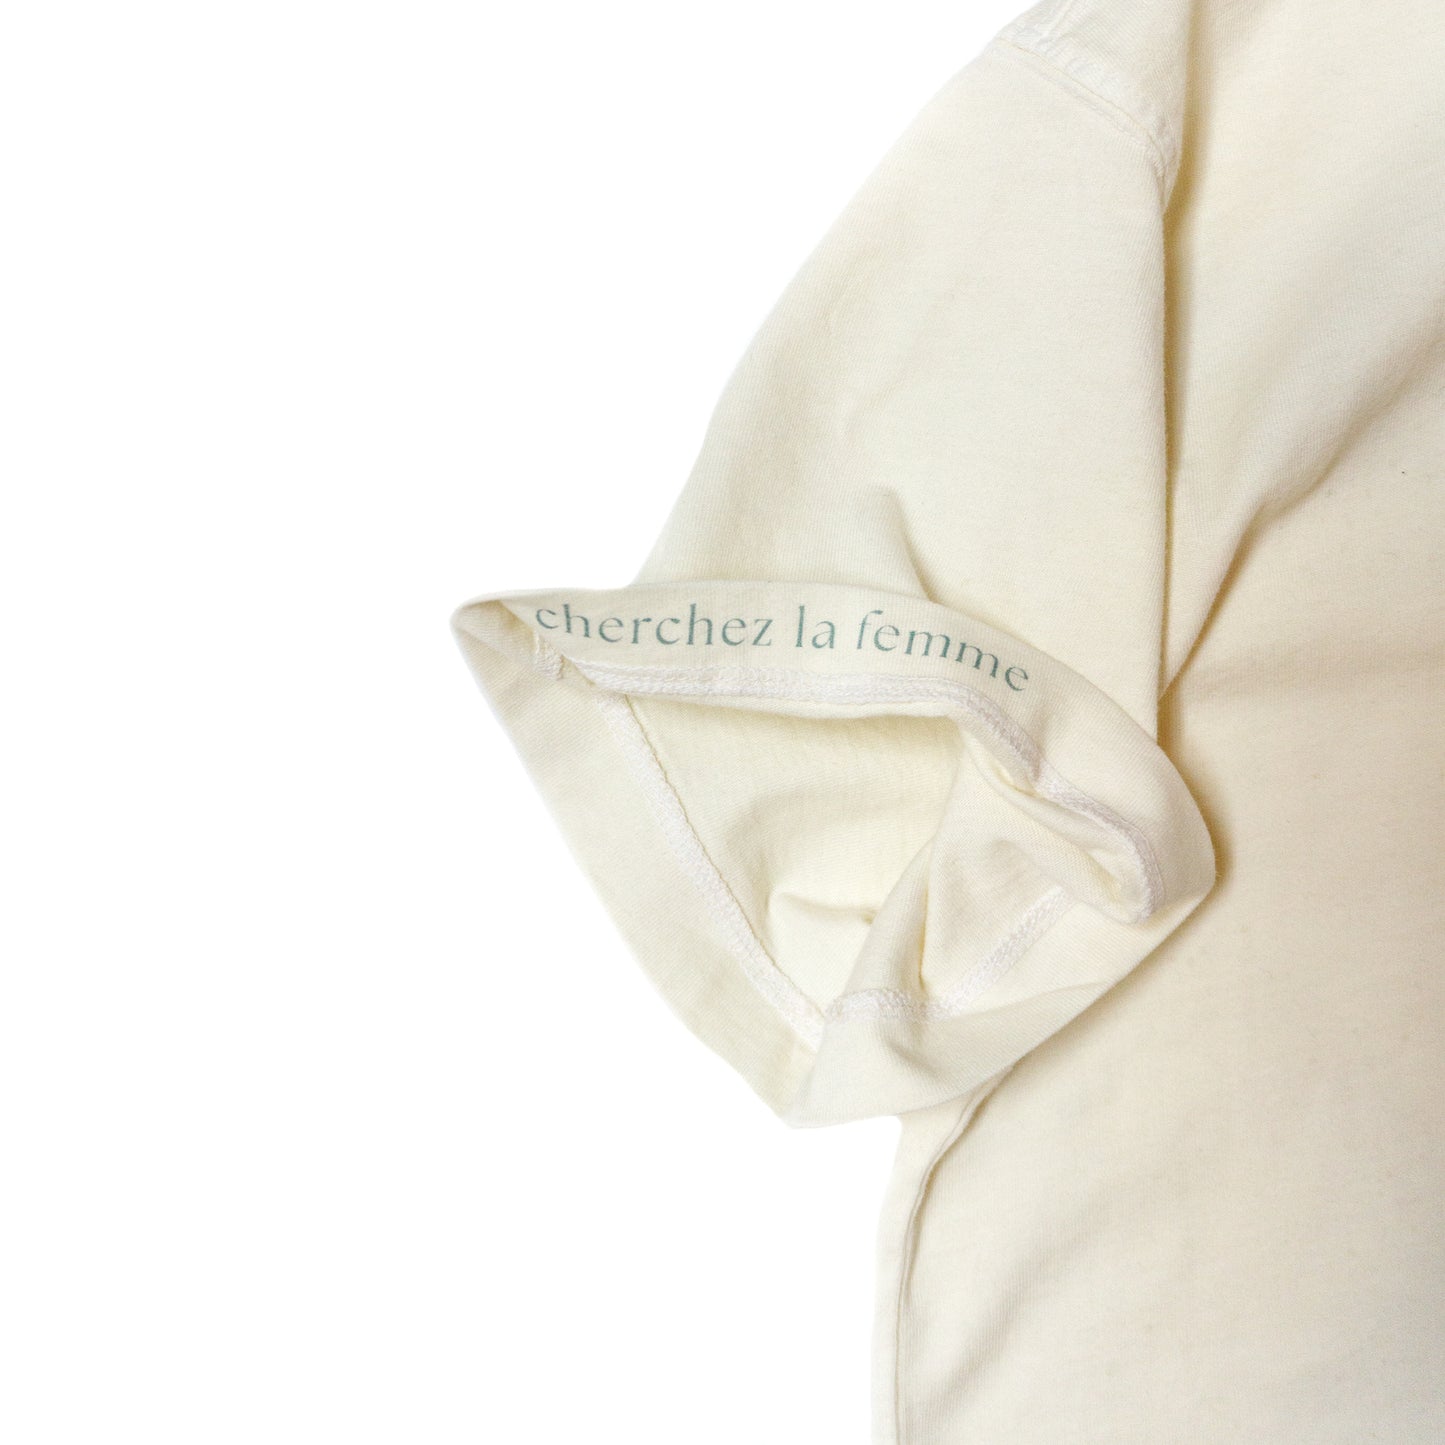 100% cotton  Smoking girl graphic   ‘Cherchez la femme’ message inside sleeve hem  Made in Los Angeles